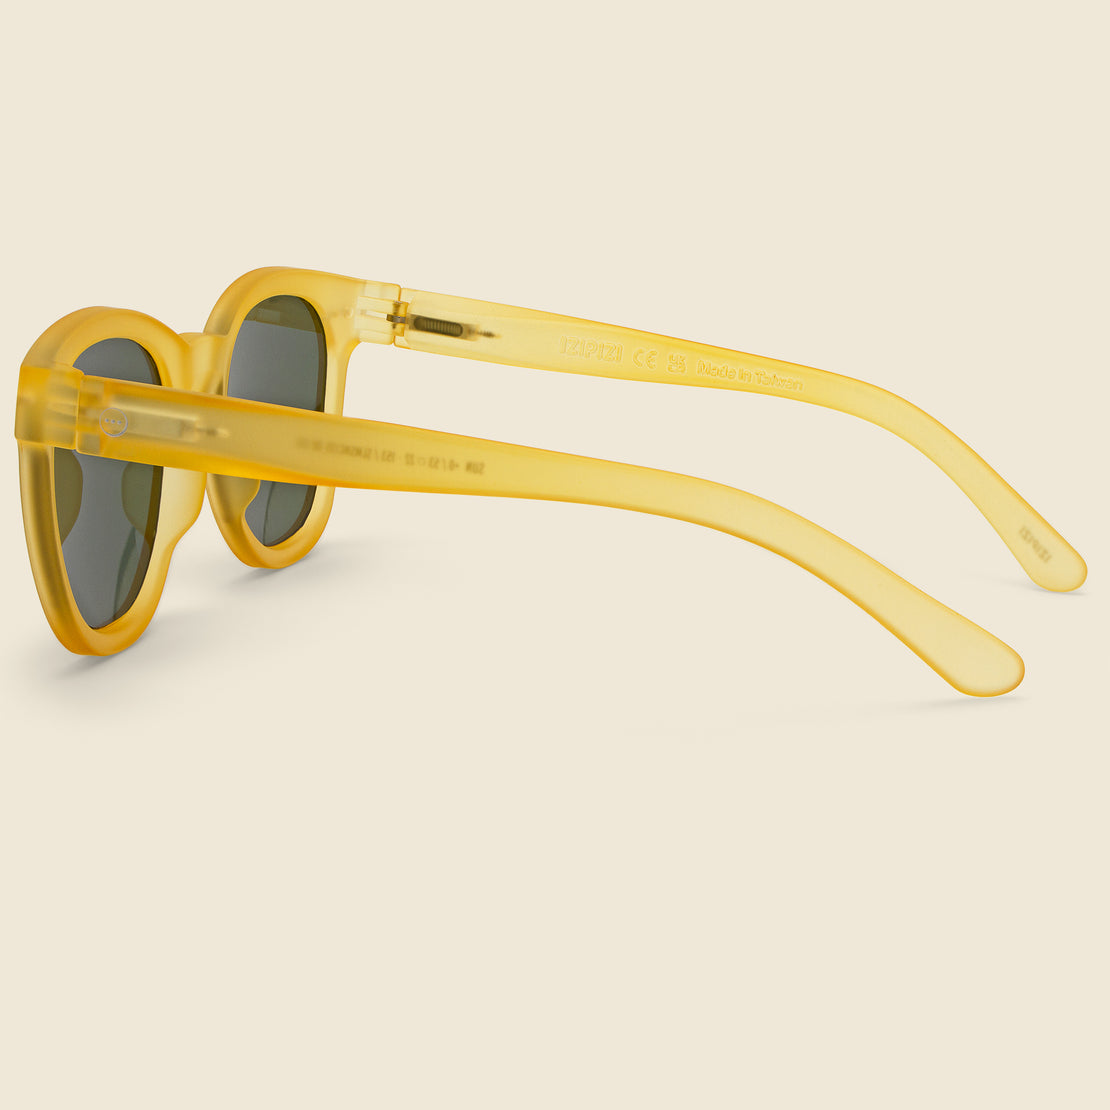 The Trapeze Oversize #N - Yellow Honey - Izipizi - STAG Provisions - Accessories - Eyewear